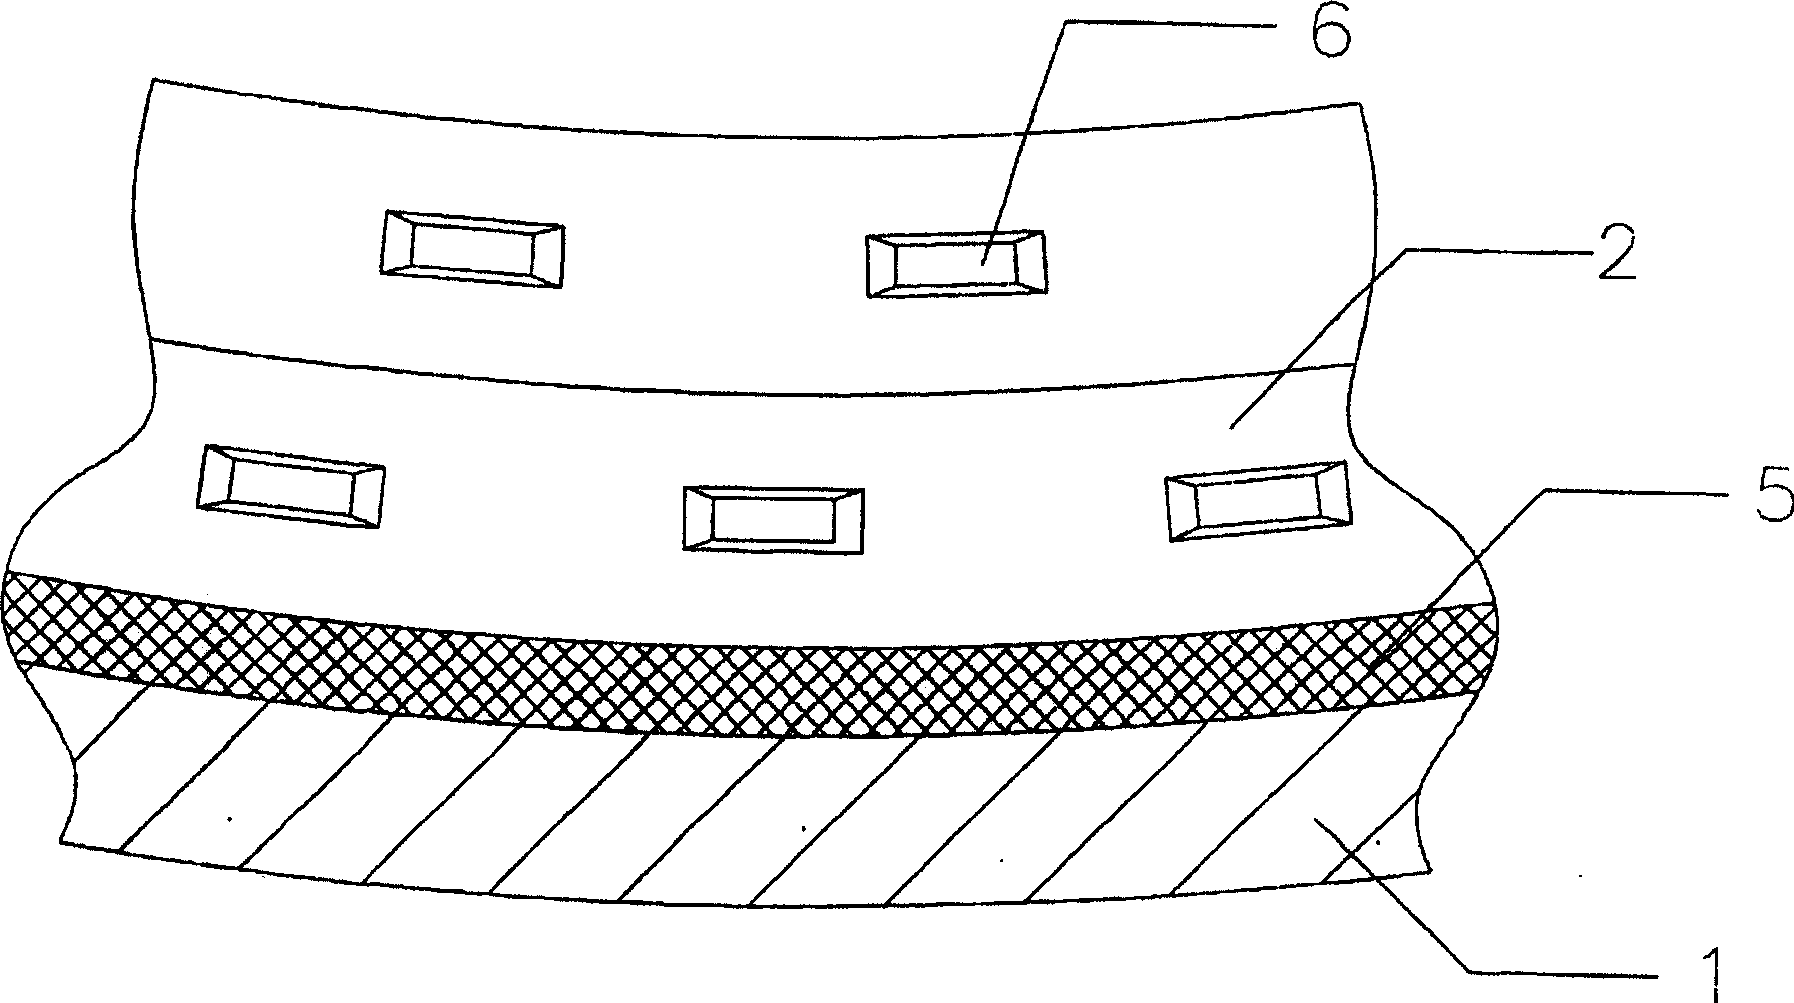 Plate-type aerator diaphragm perforation device